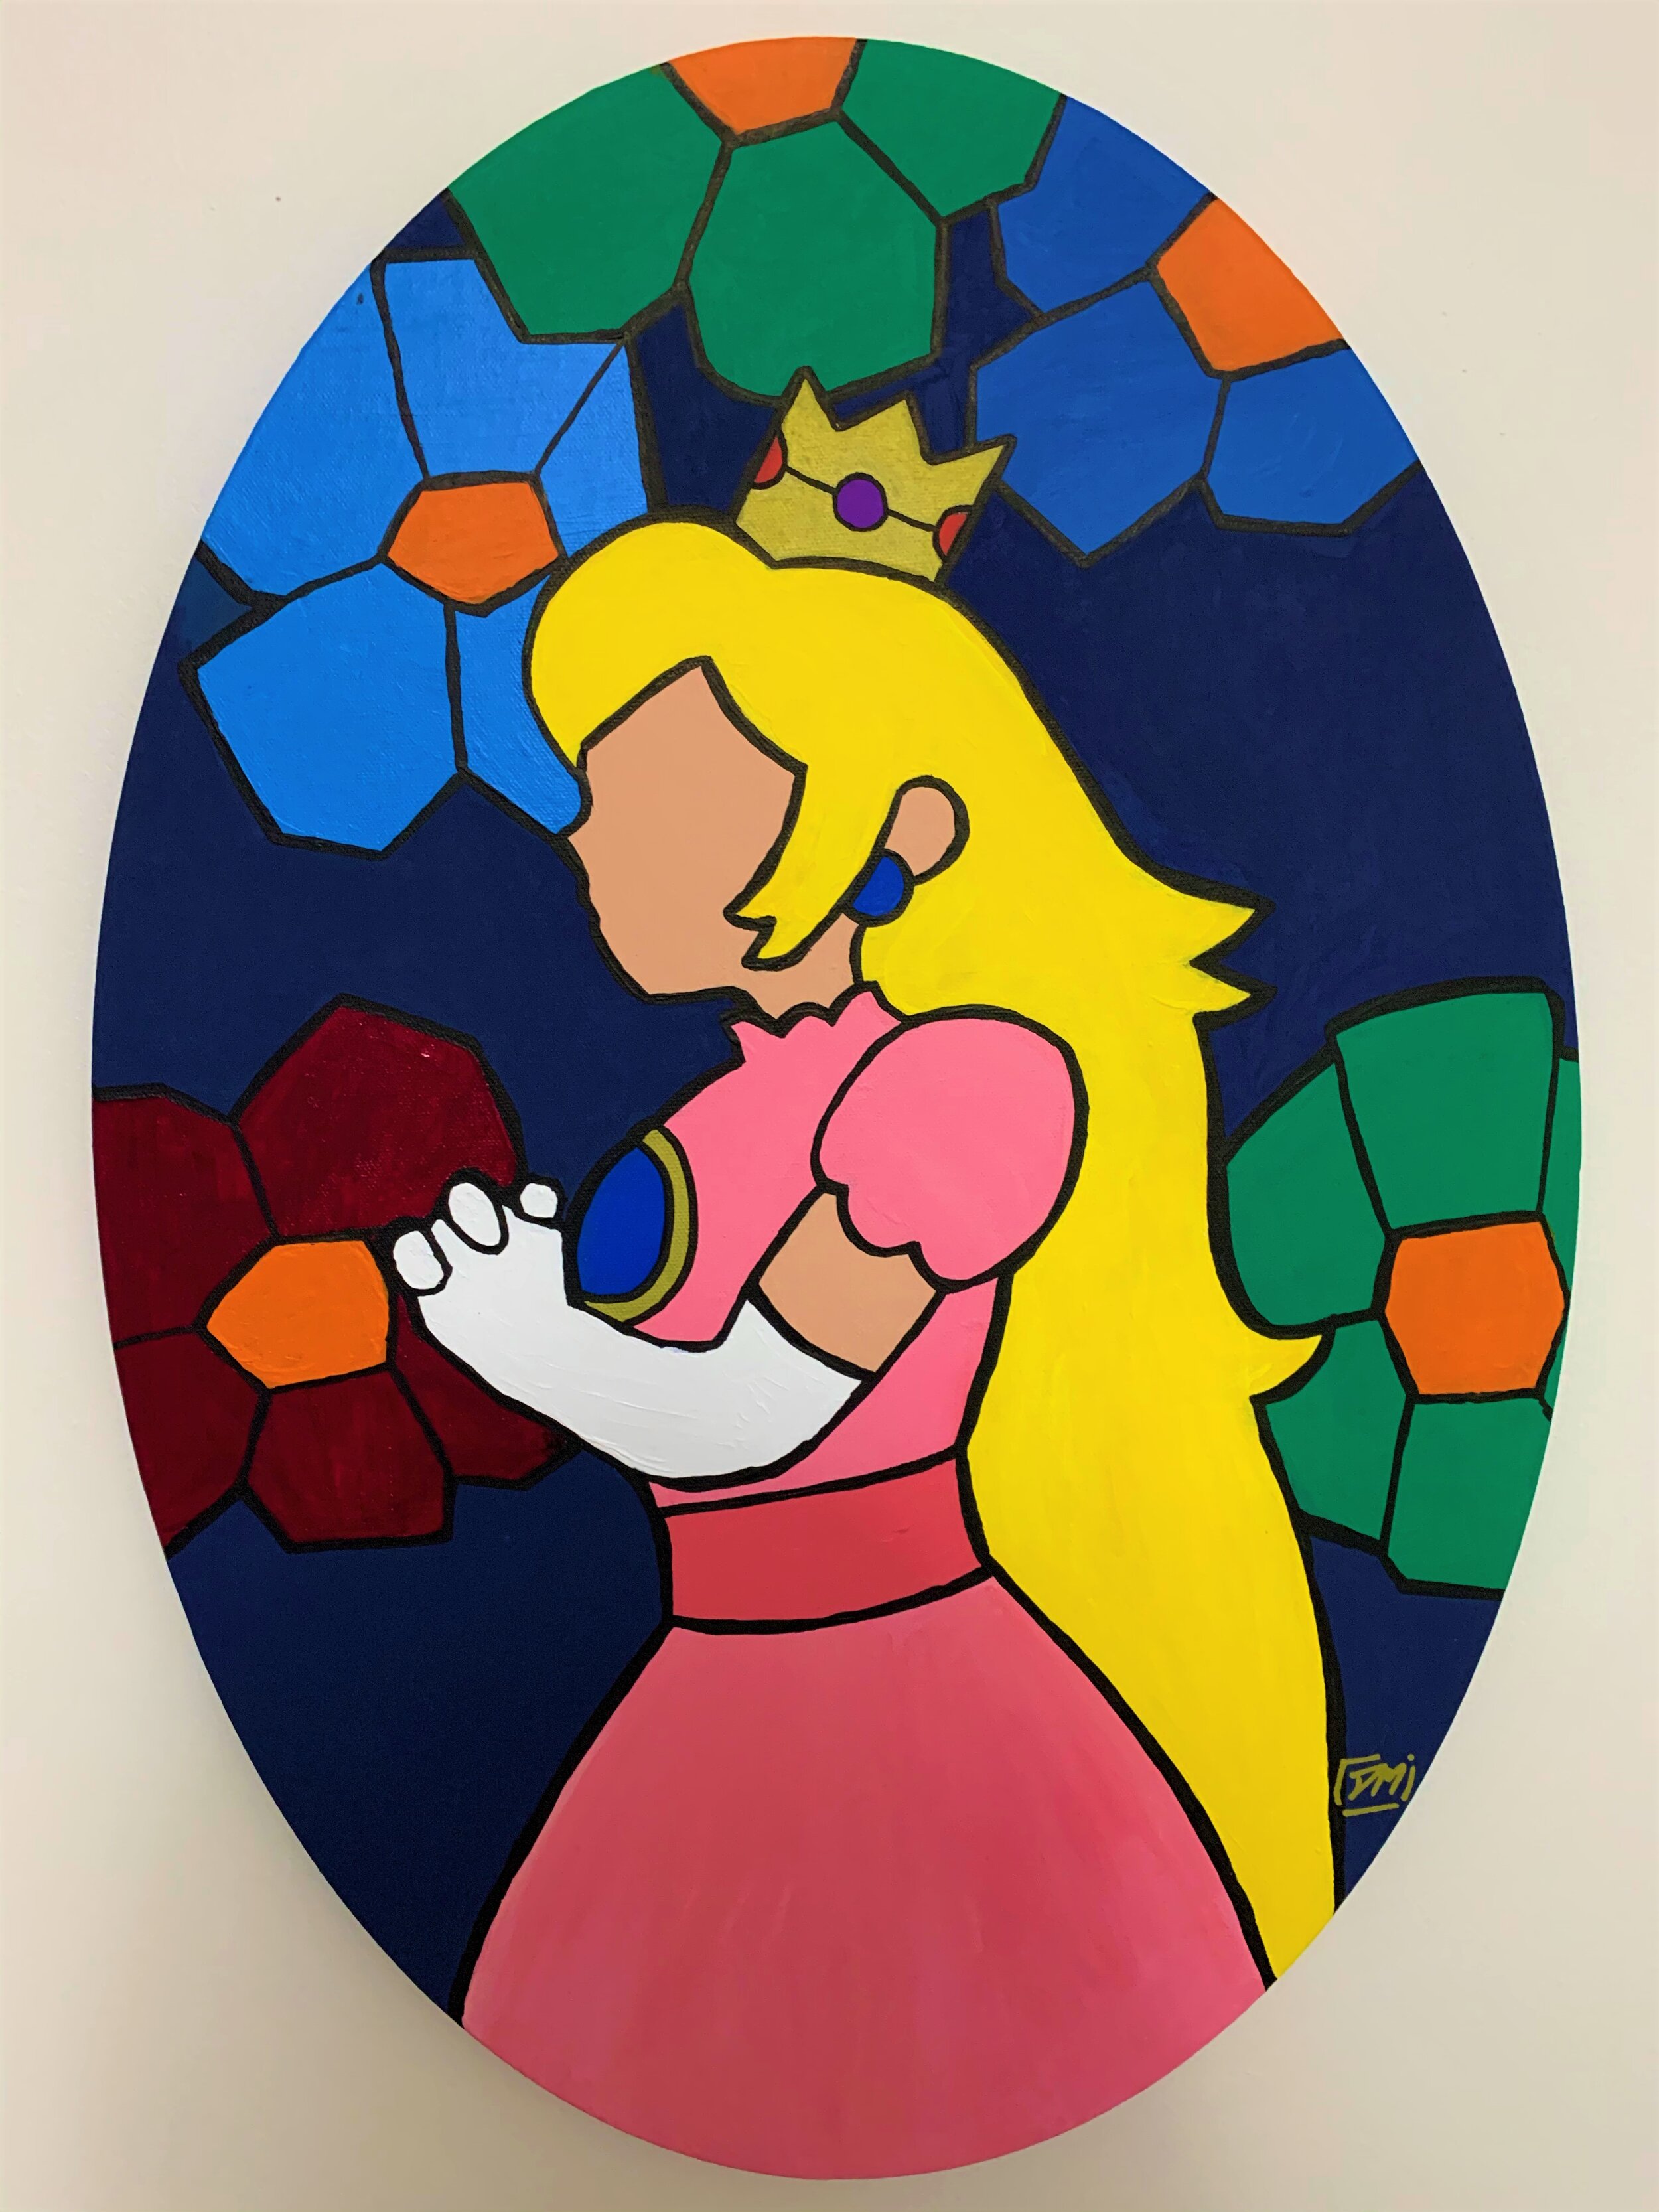 Princess Peach from Super Mario  Super princess, Super Mario art